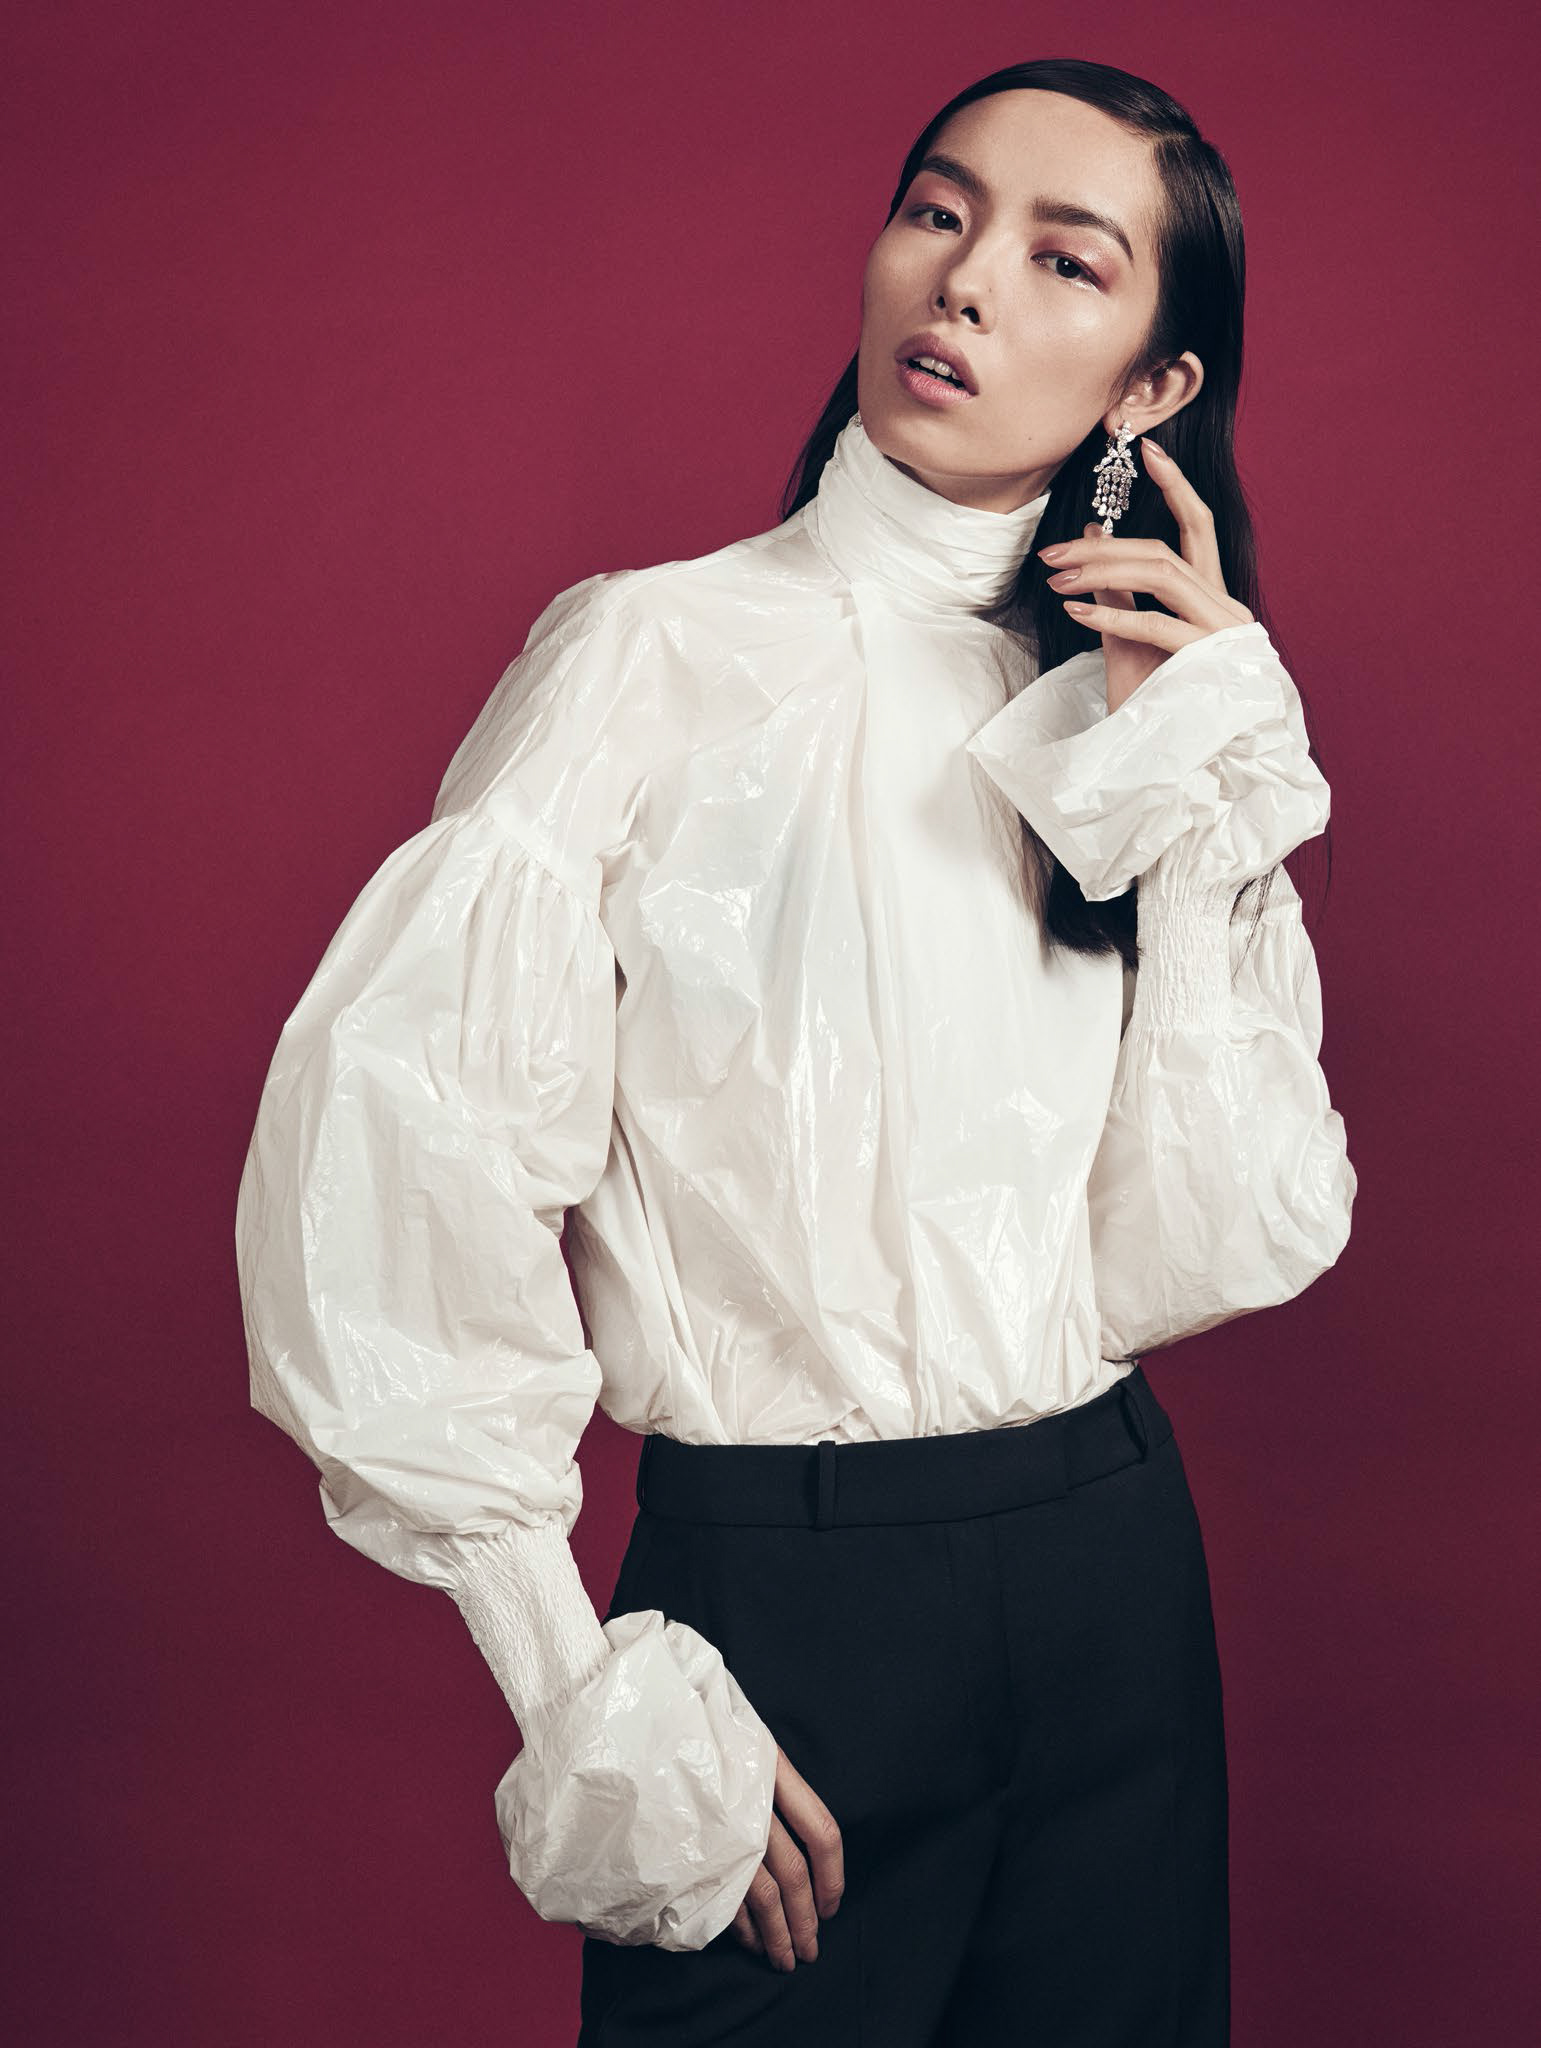 Vogue-China-June-2016-Fei-Fei-Sun-by-Sharif-Hamza-06.jpg